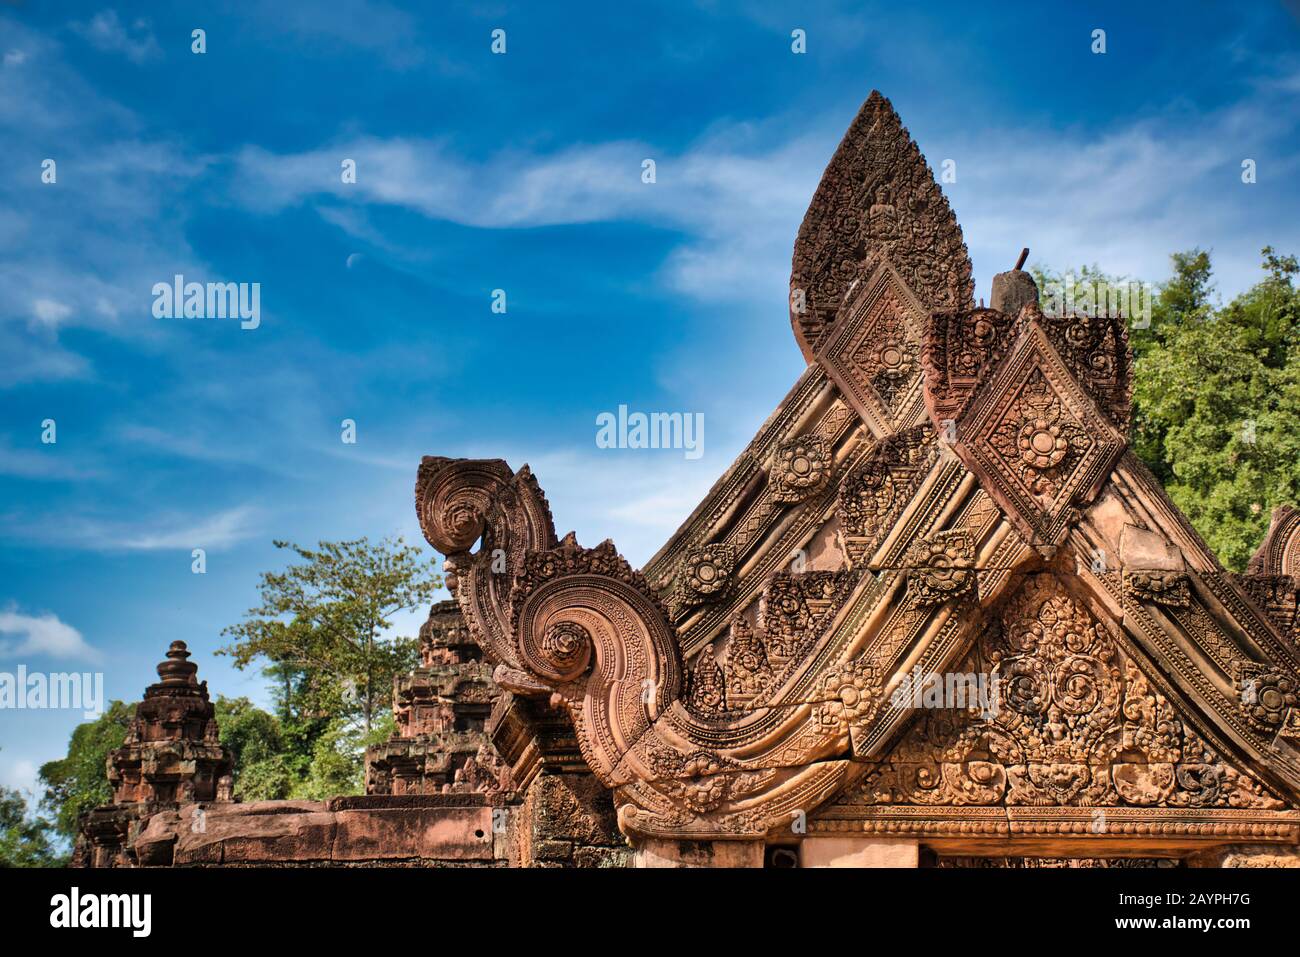 Banteay Srei oder Banteay Srey Temple Site unter den alten Ruinen des Hindutempel-Komplexes Angkor Wat in Siem Reap, Kambodscha. Der Tempel ist gewidmet Stockfoto